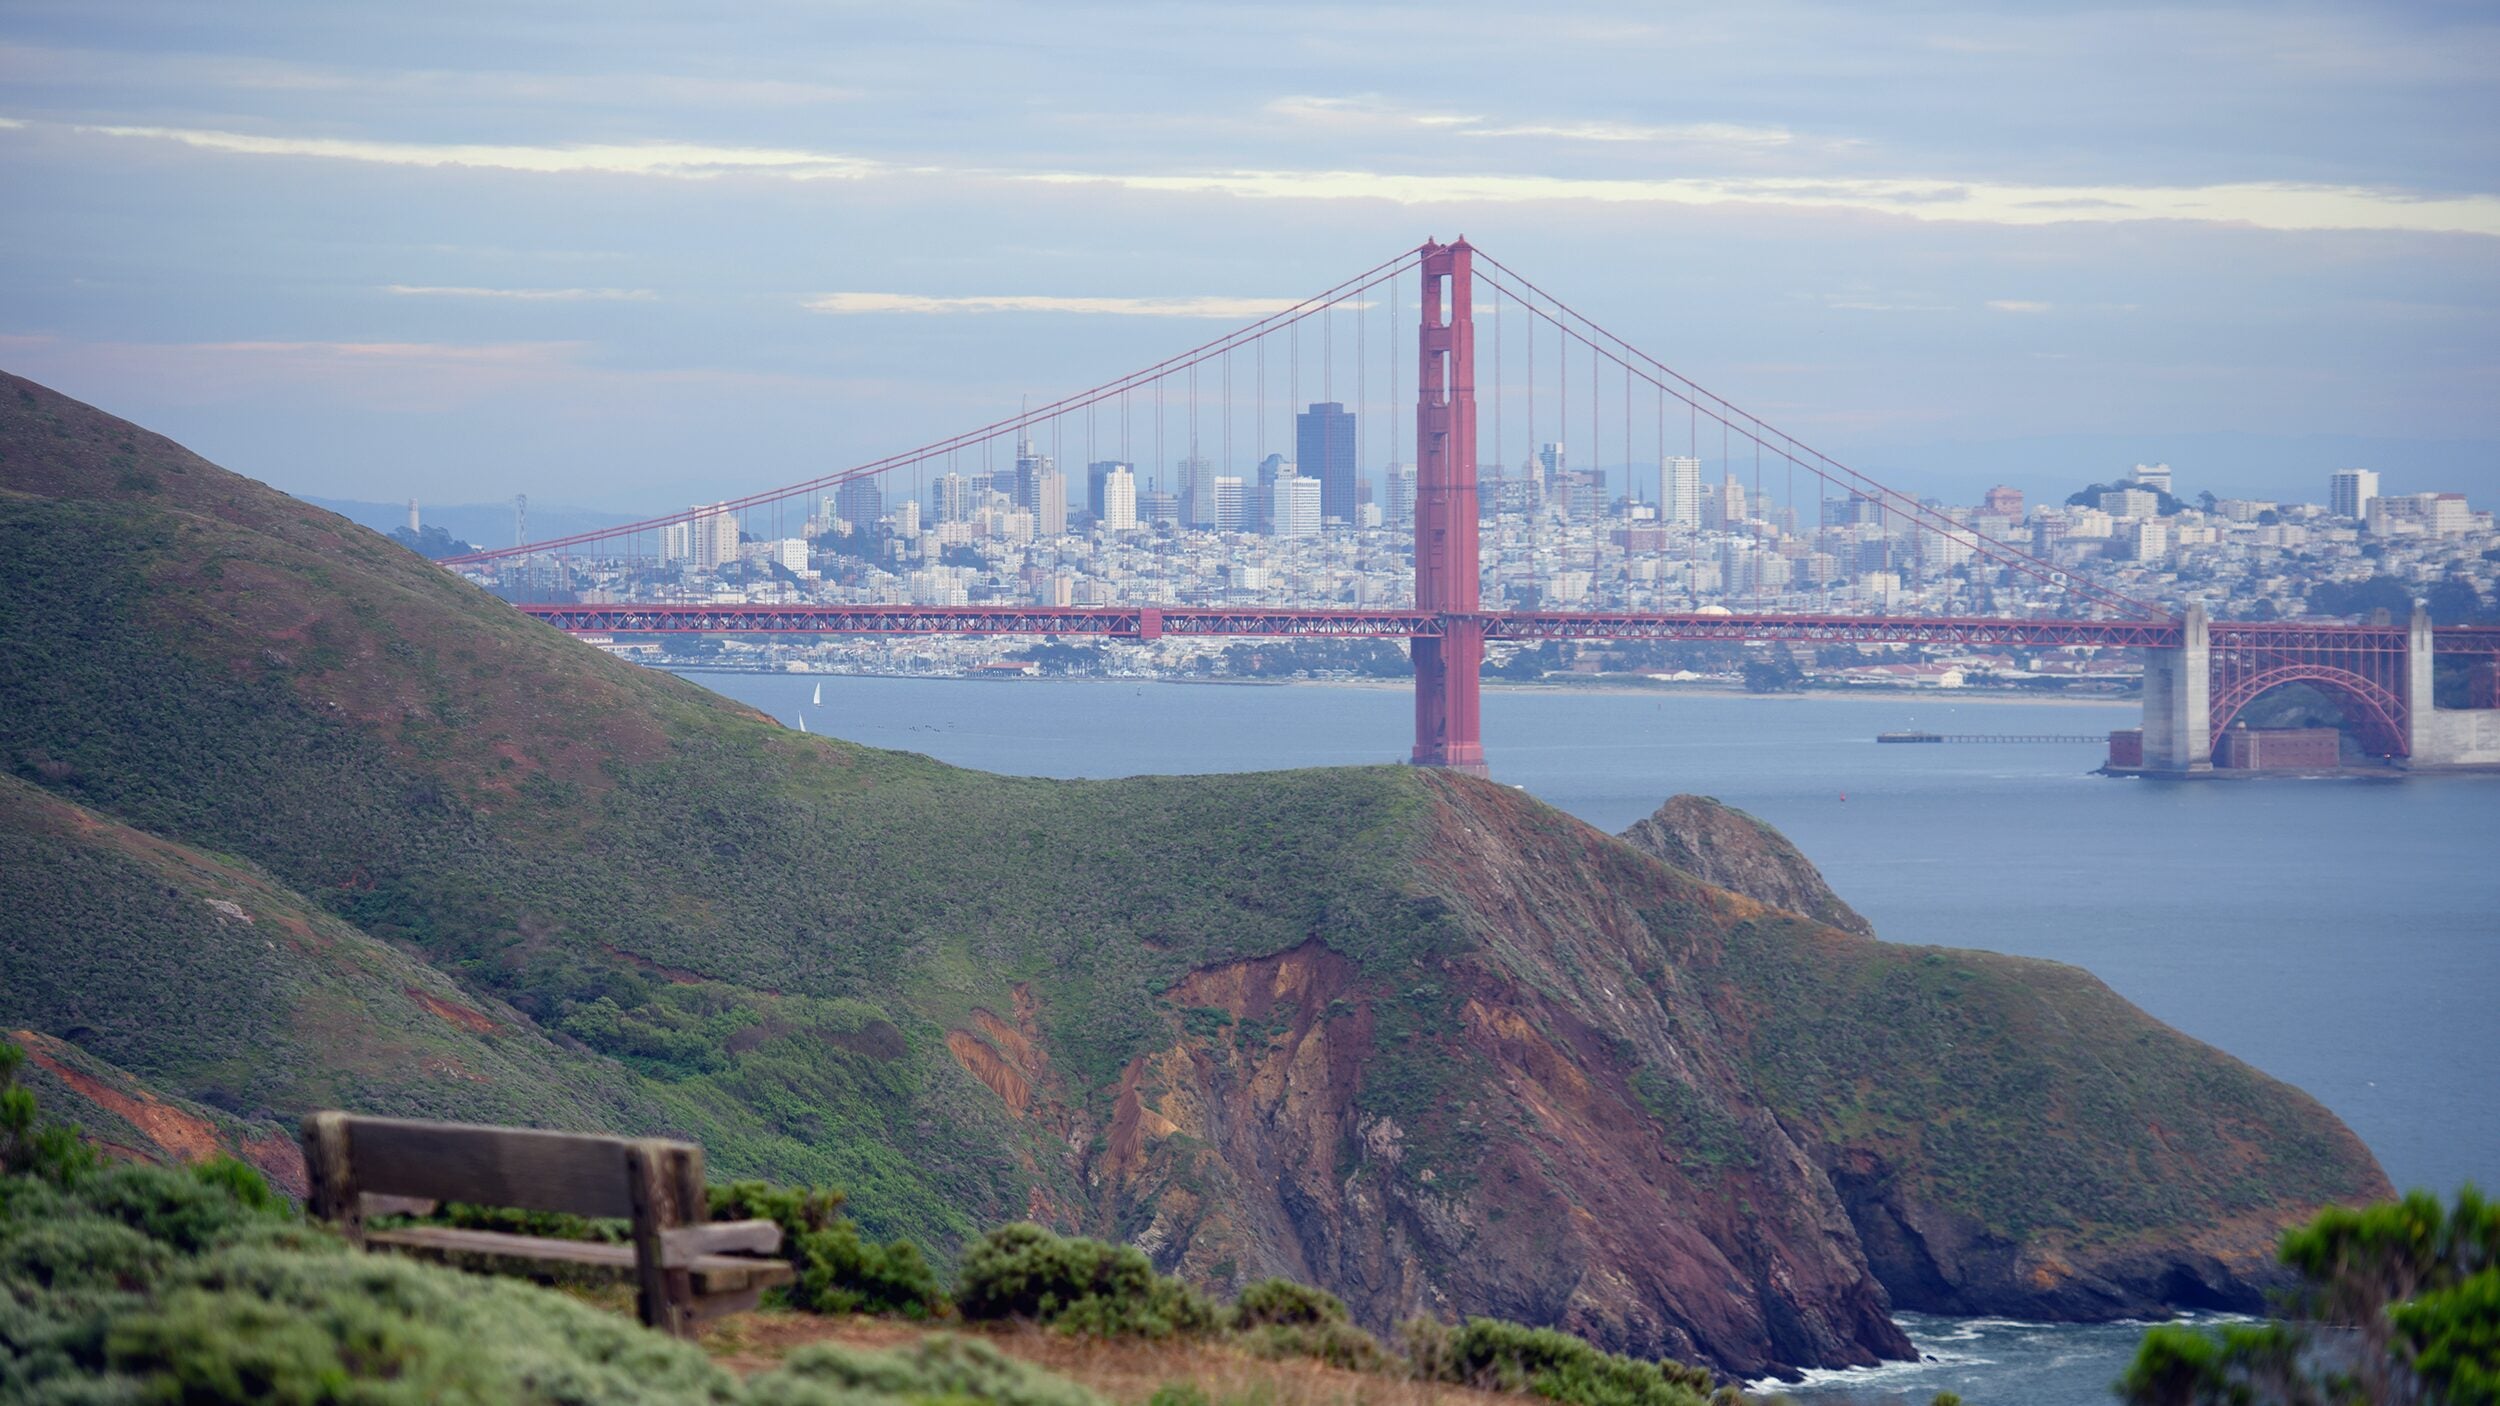 The Golden Gate Bridge and the San Francisco skyline.